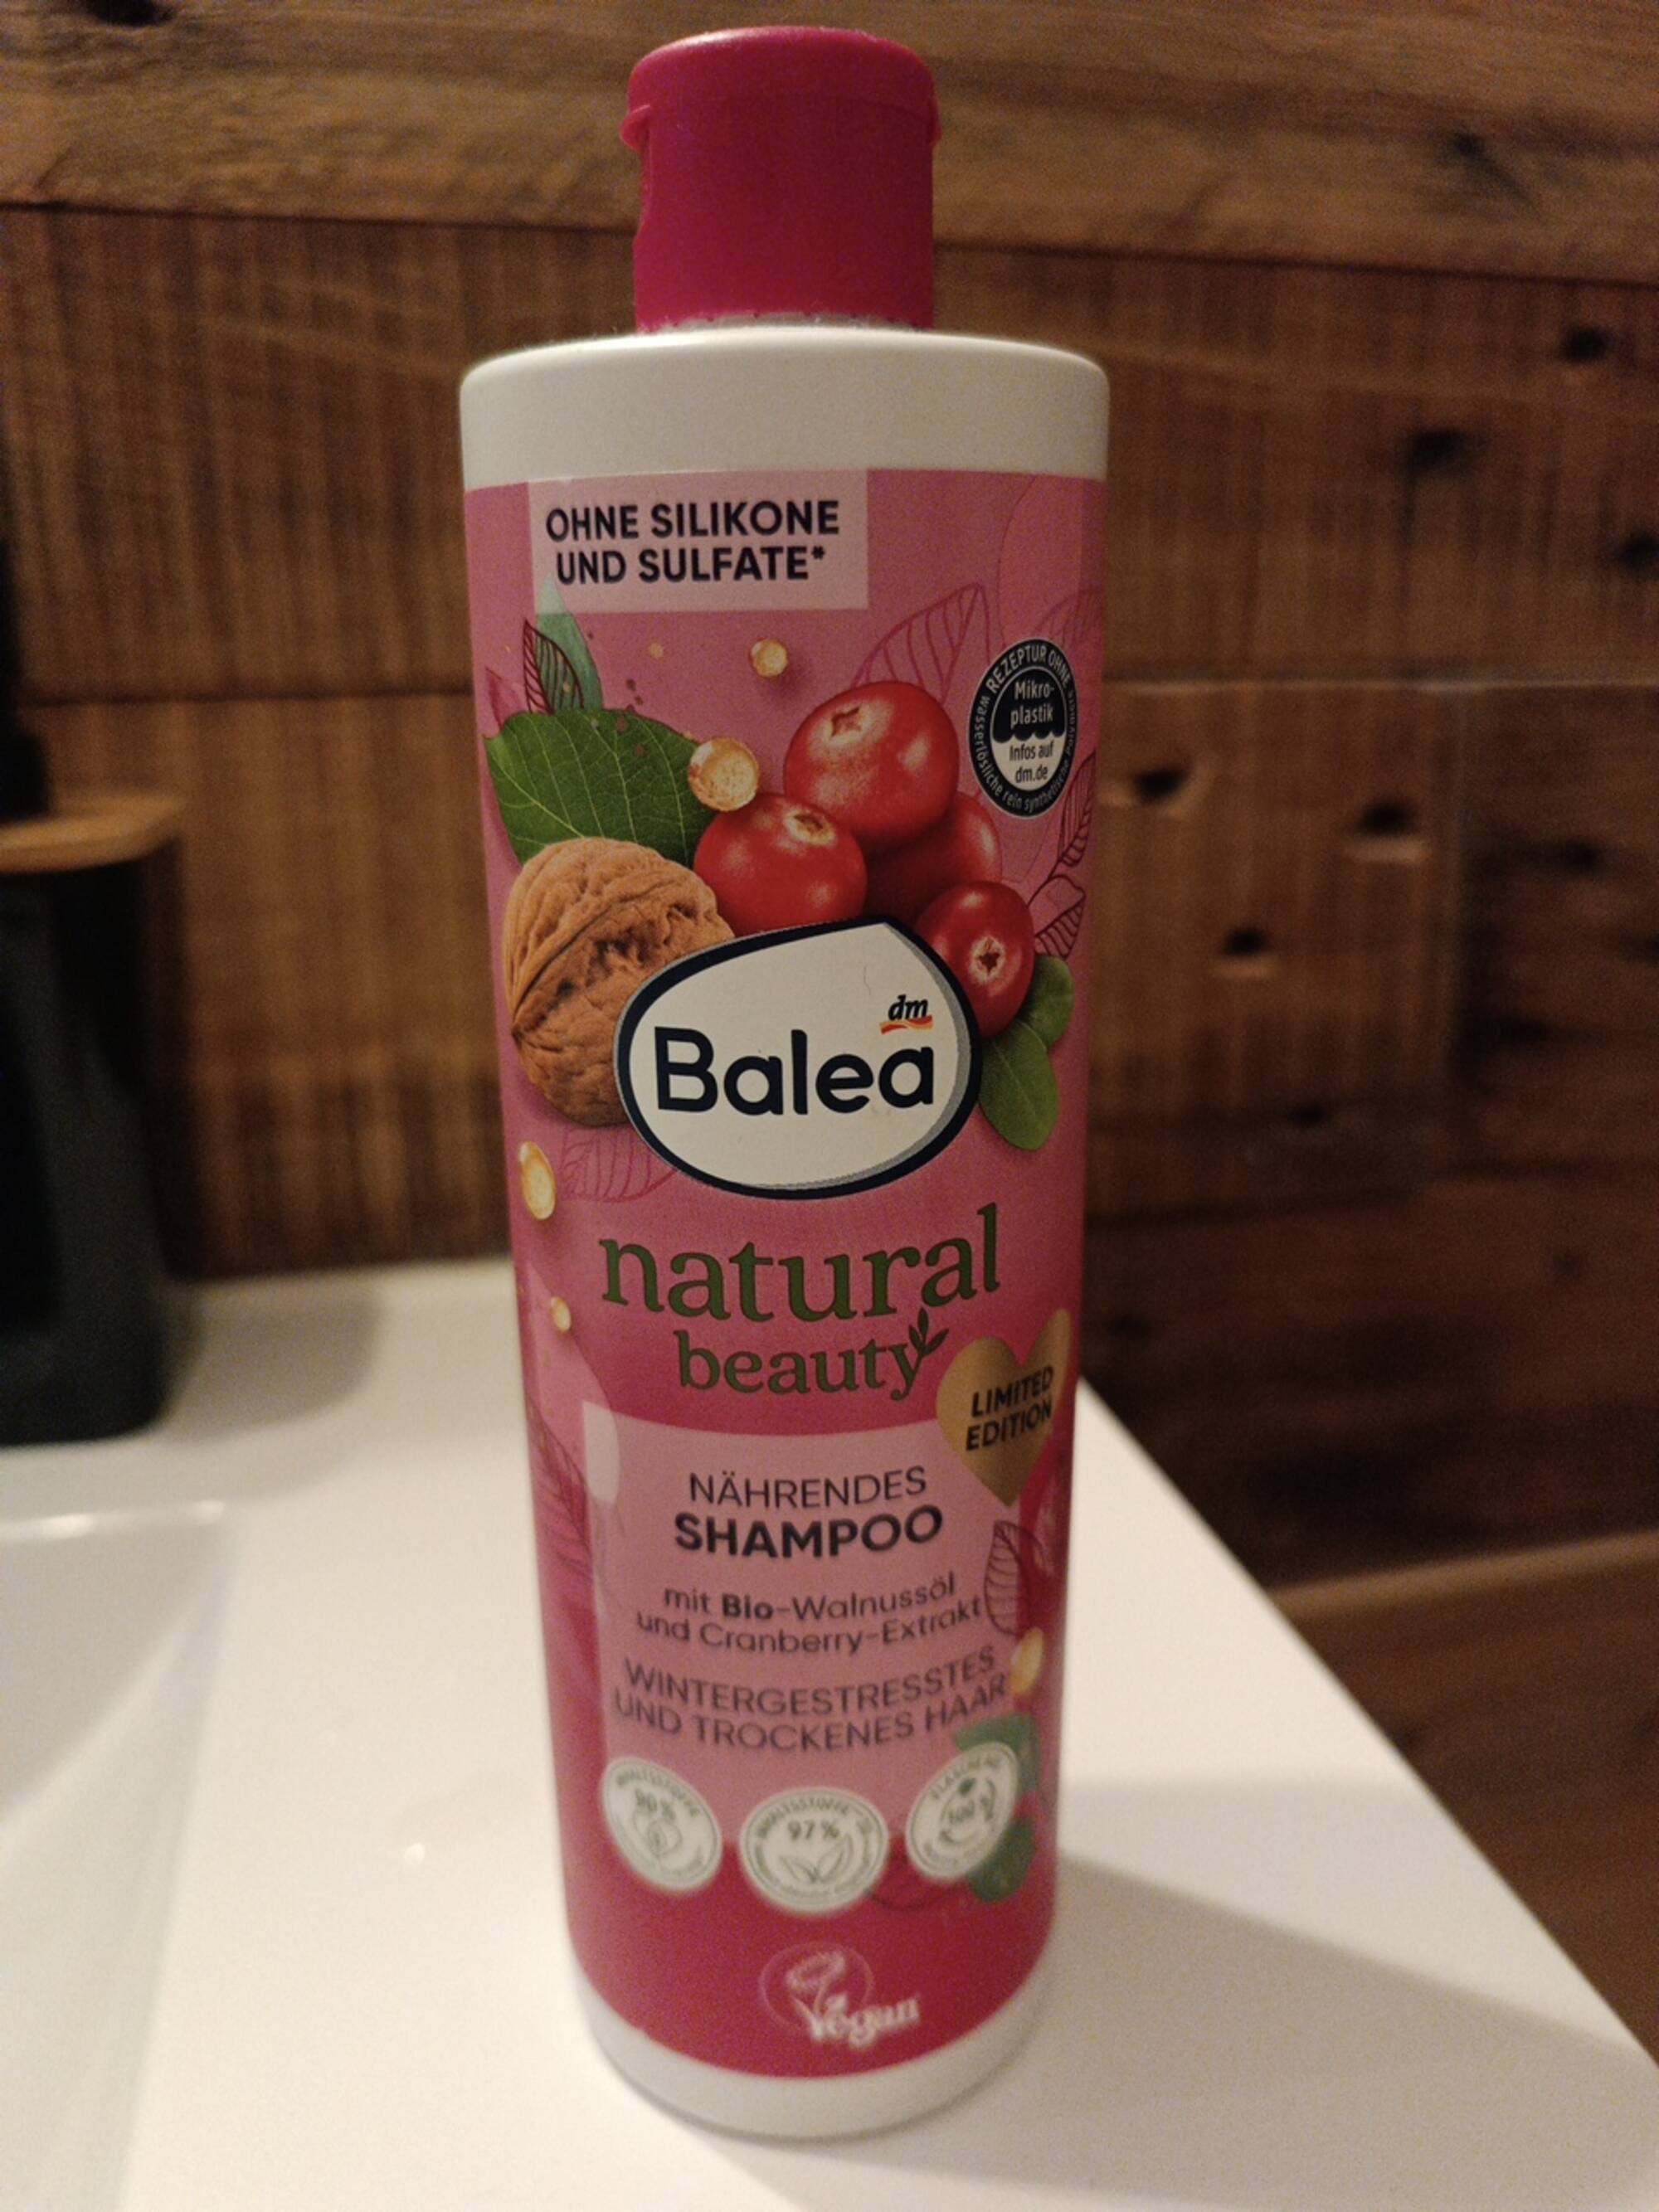 BALEA - Natural beauty - Nährendes shampoo